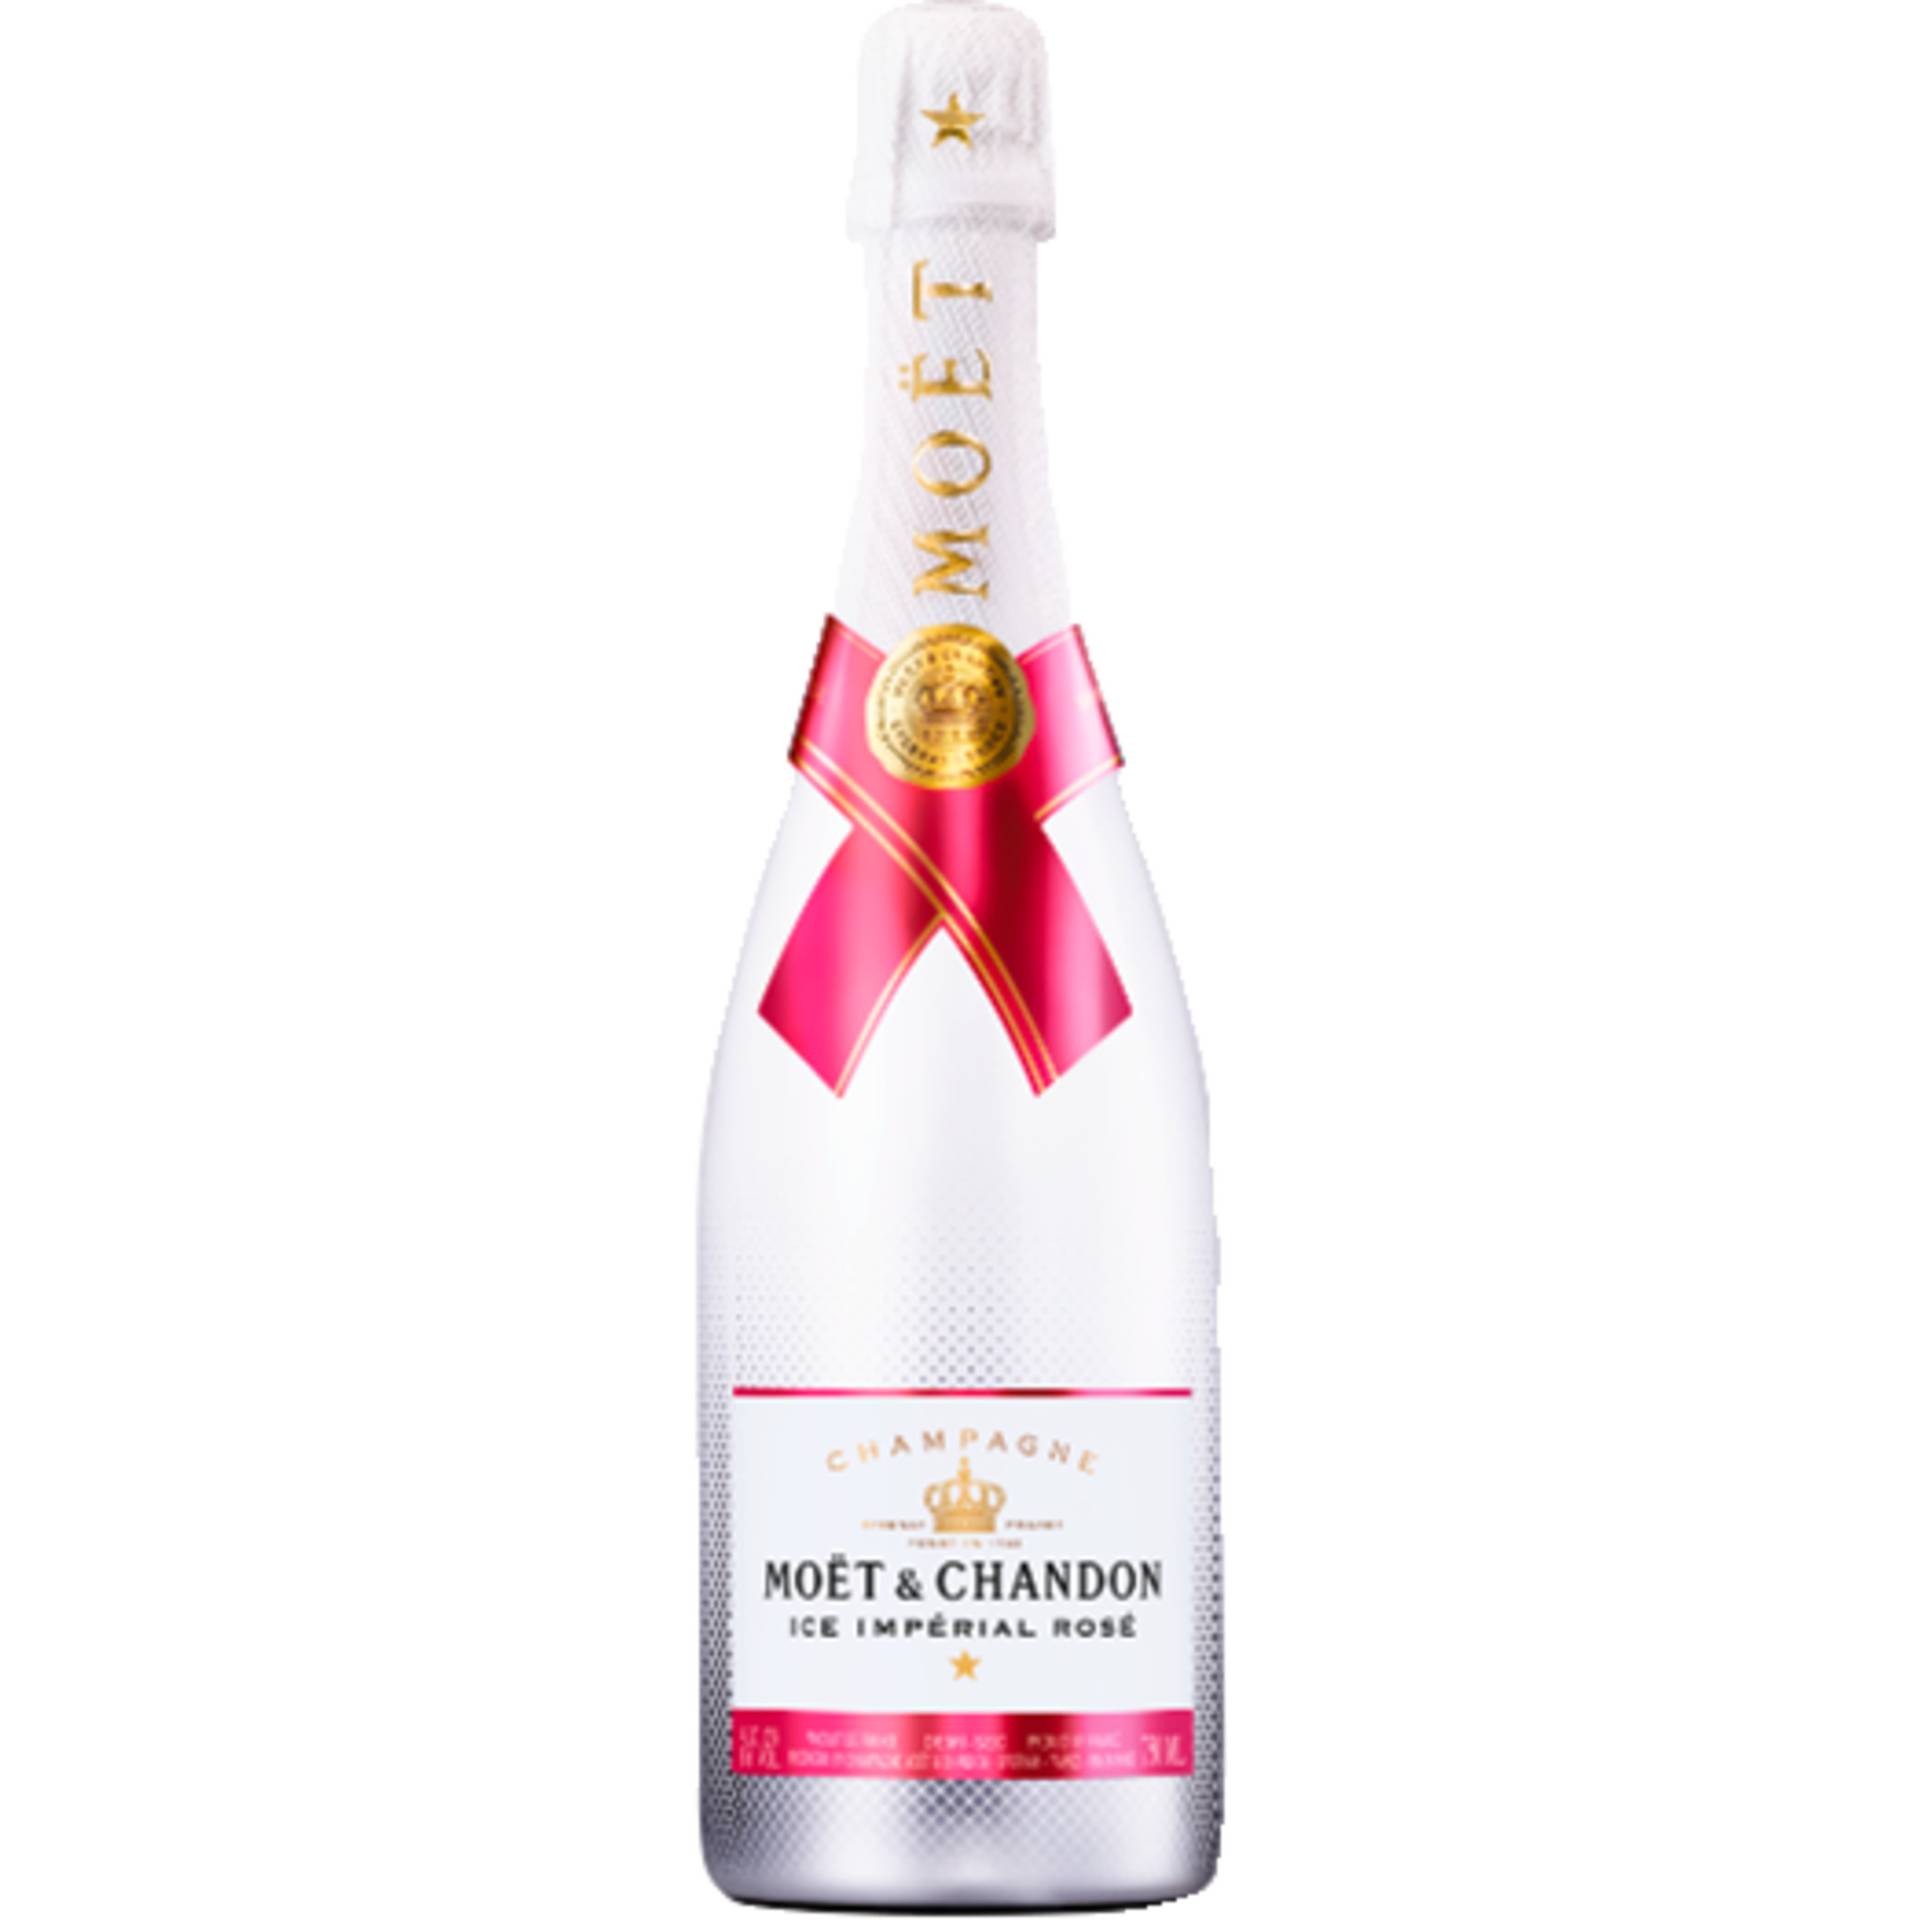 Champagne Moet & Chandon Ice Imperial Rosé, Demi Sec, Champagne AC, Champagne, Schaumwein von Champagne Moet & Chardon, 51230 Epernay, France